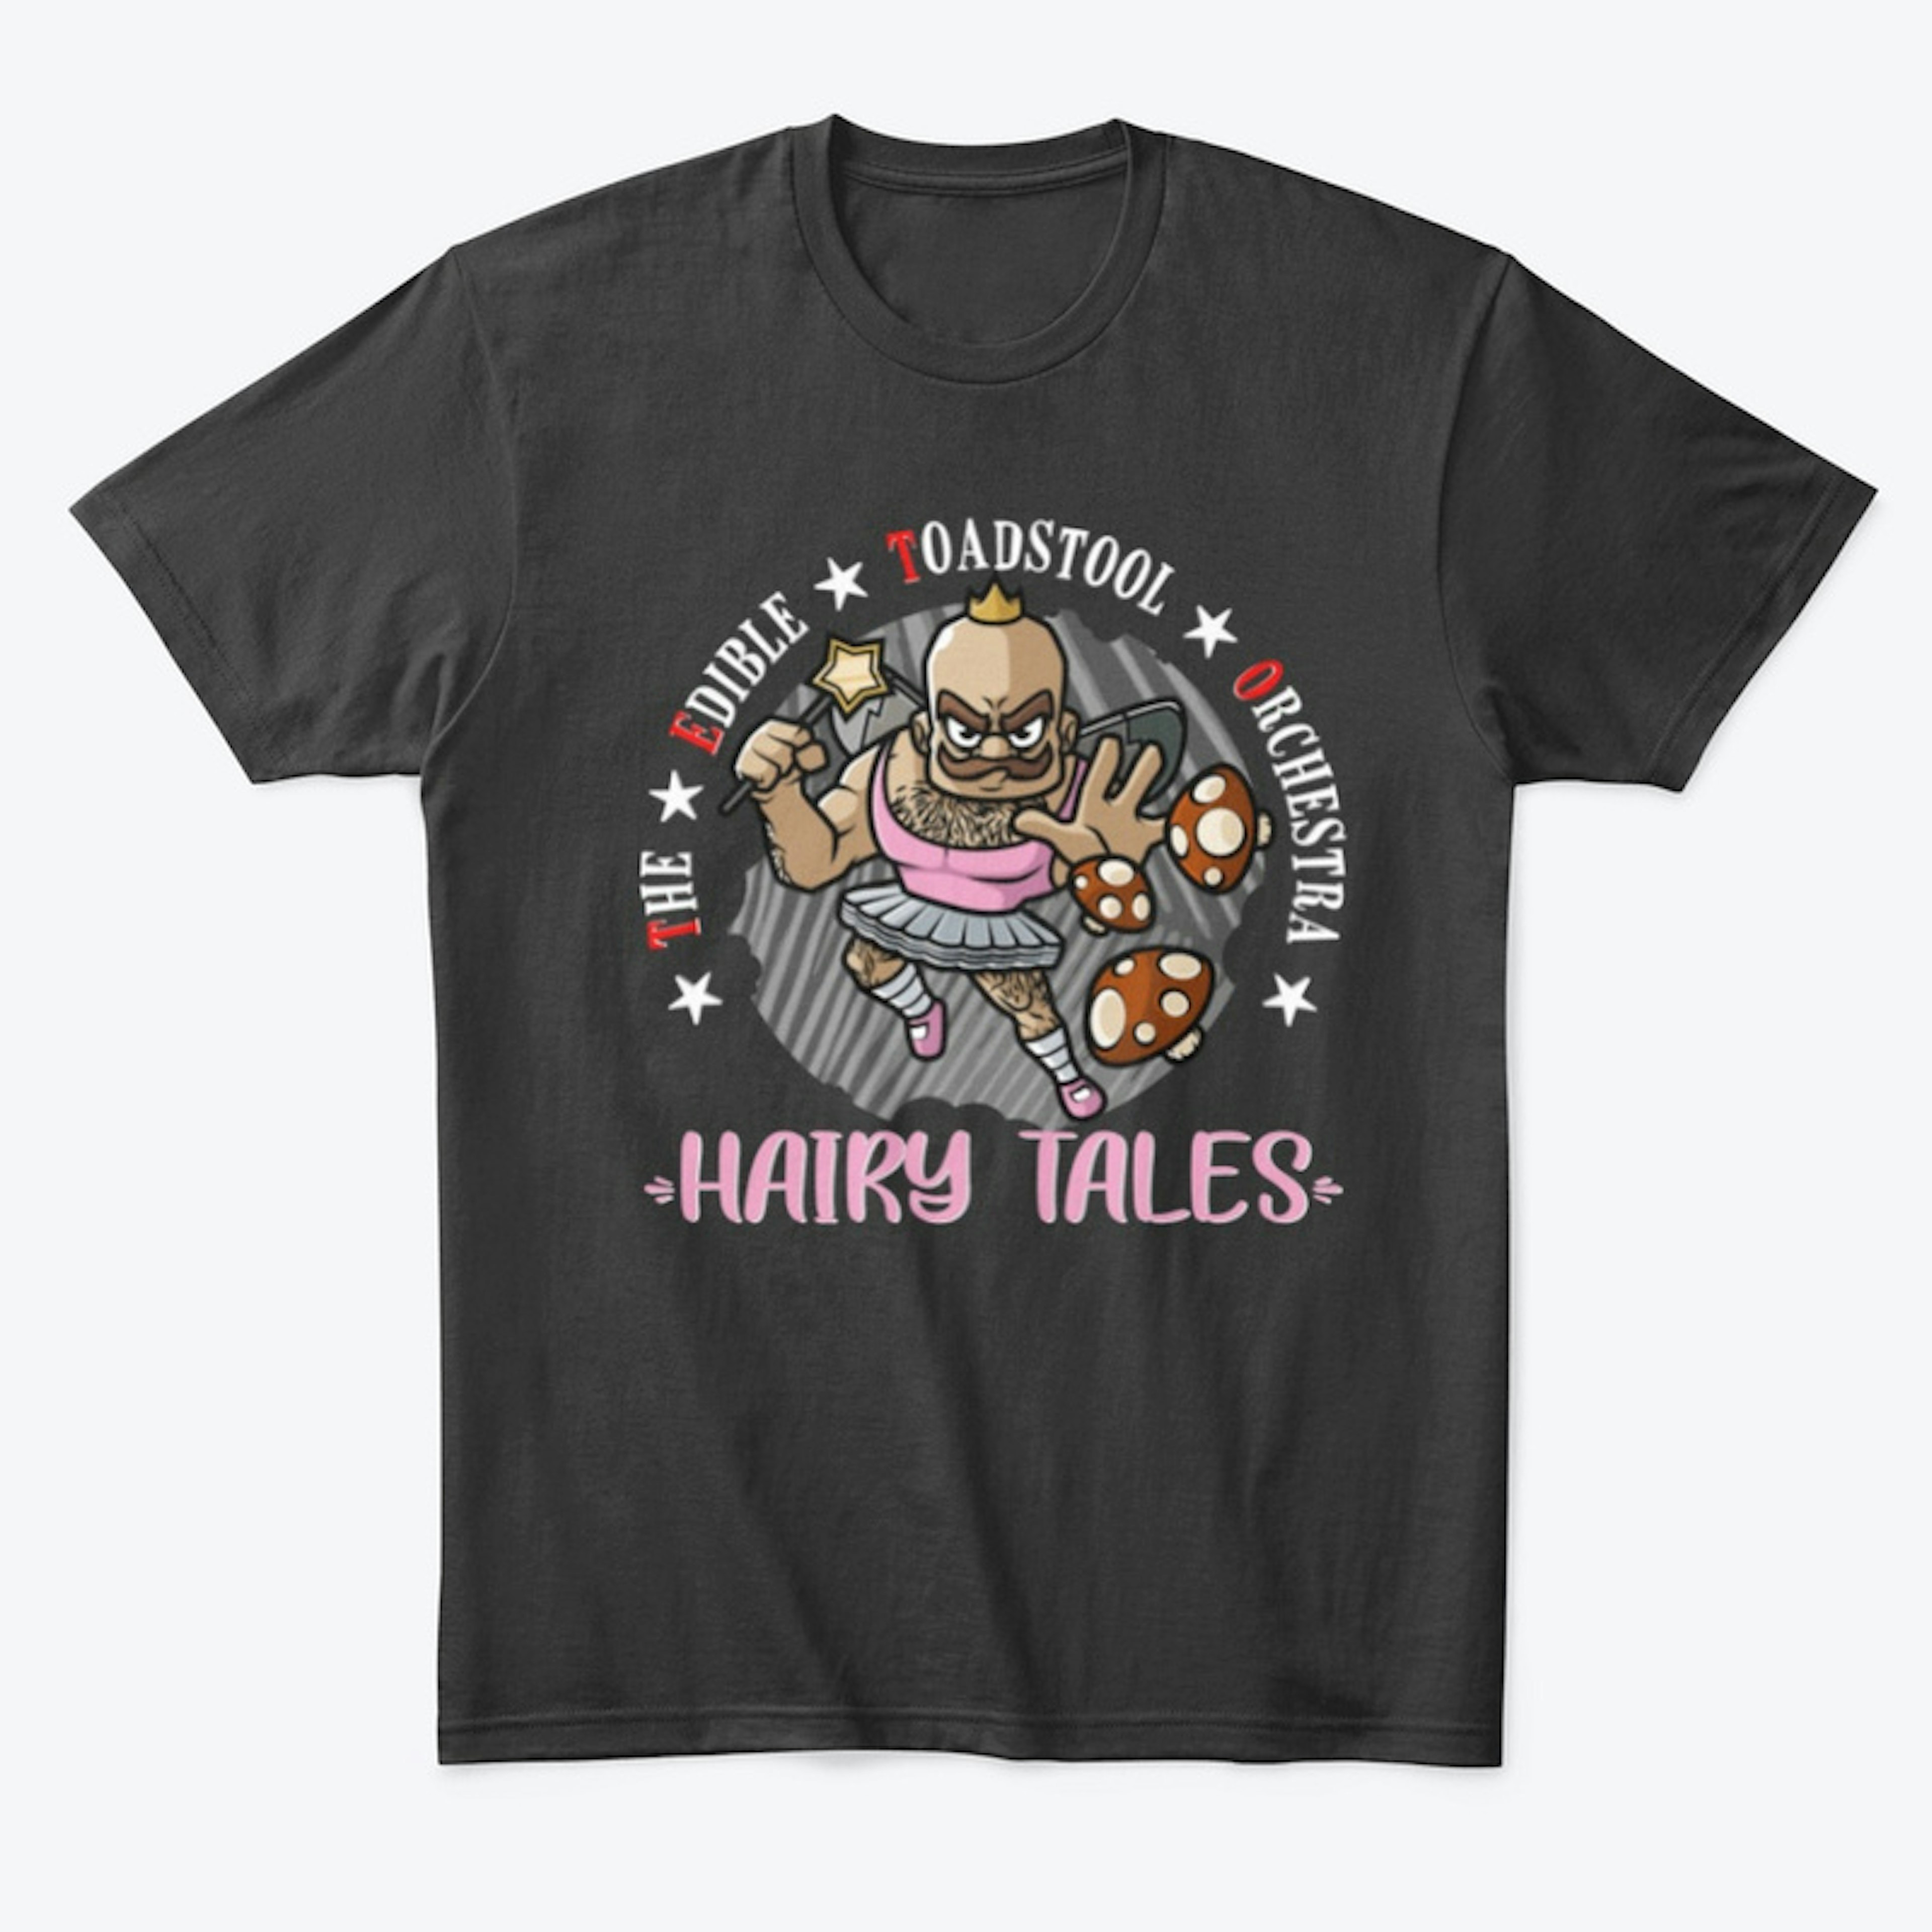 HAIRY TALES - Man Shirt